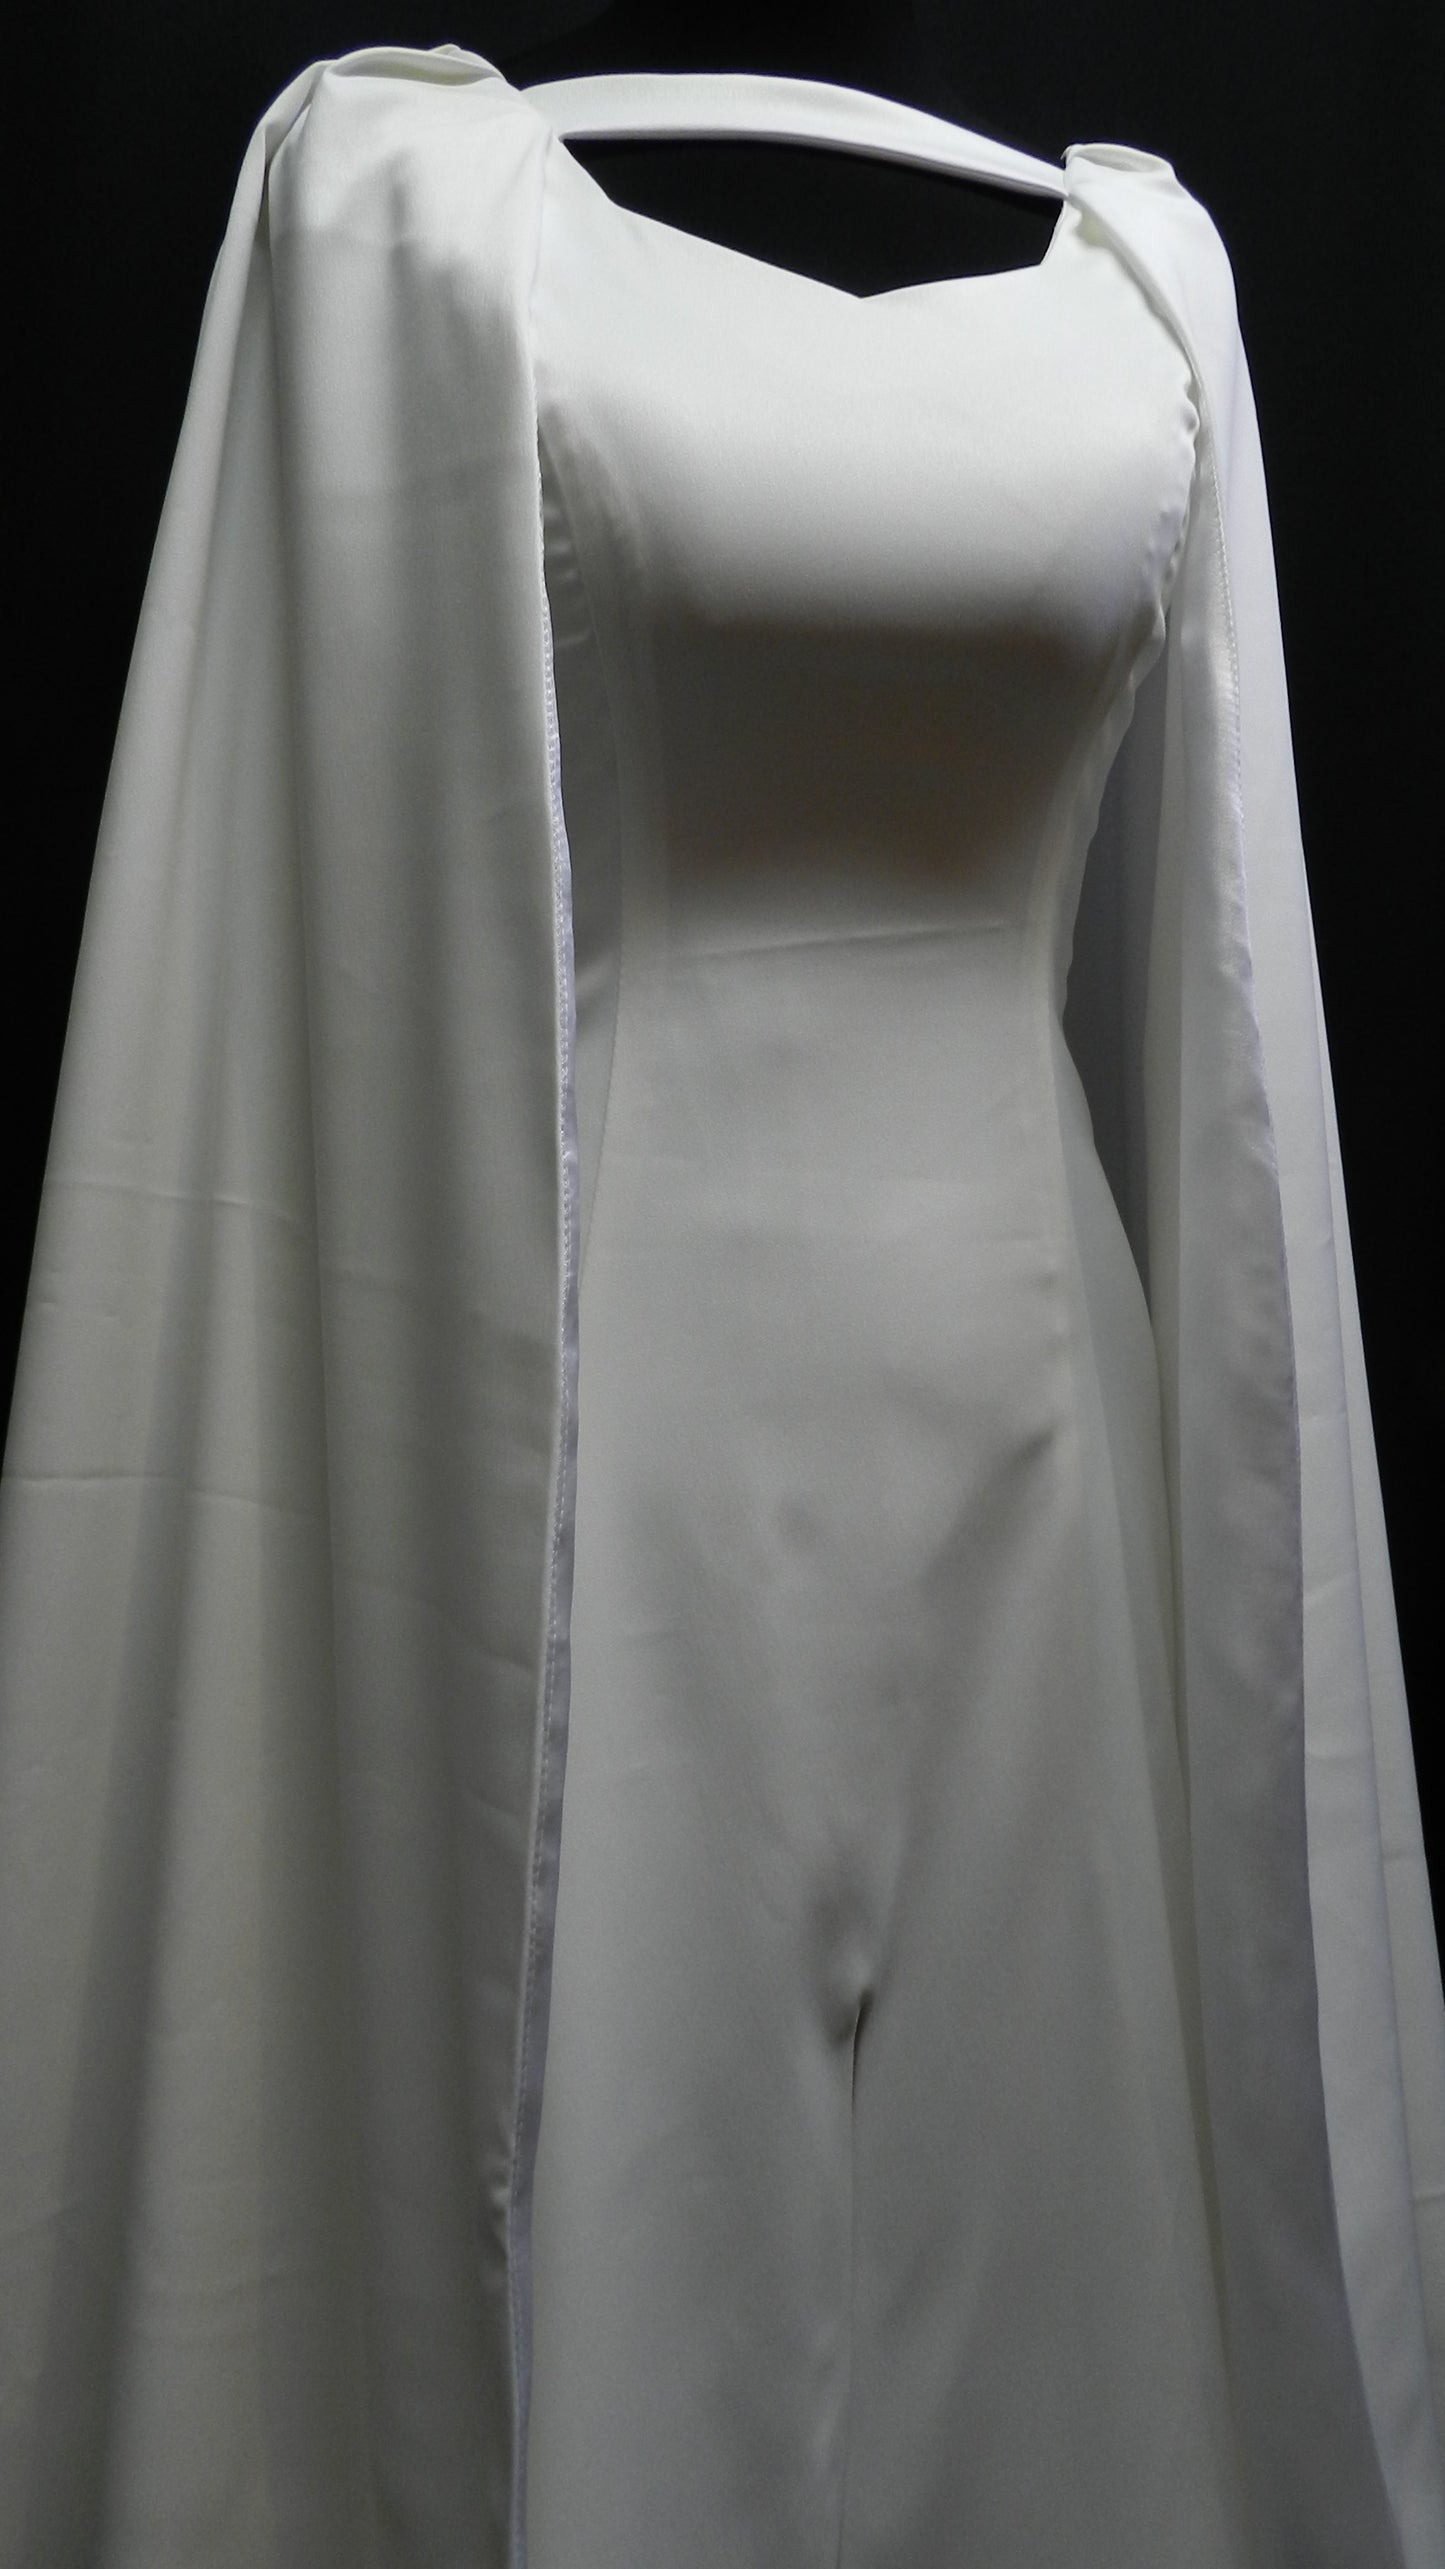 Inspired by Game Of Thrones Daenerys Targaryen season 5 white dress custom made to your size!